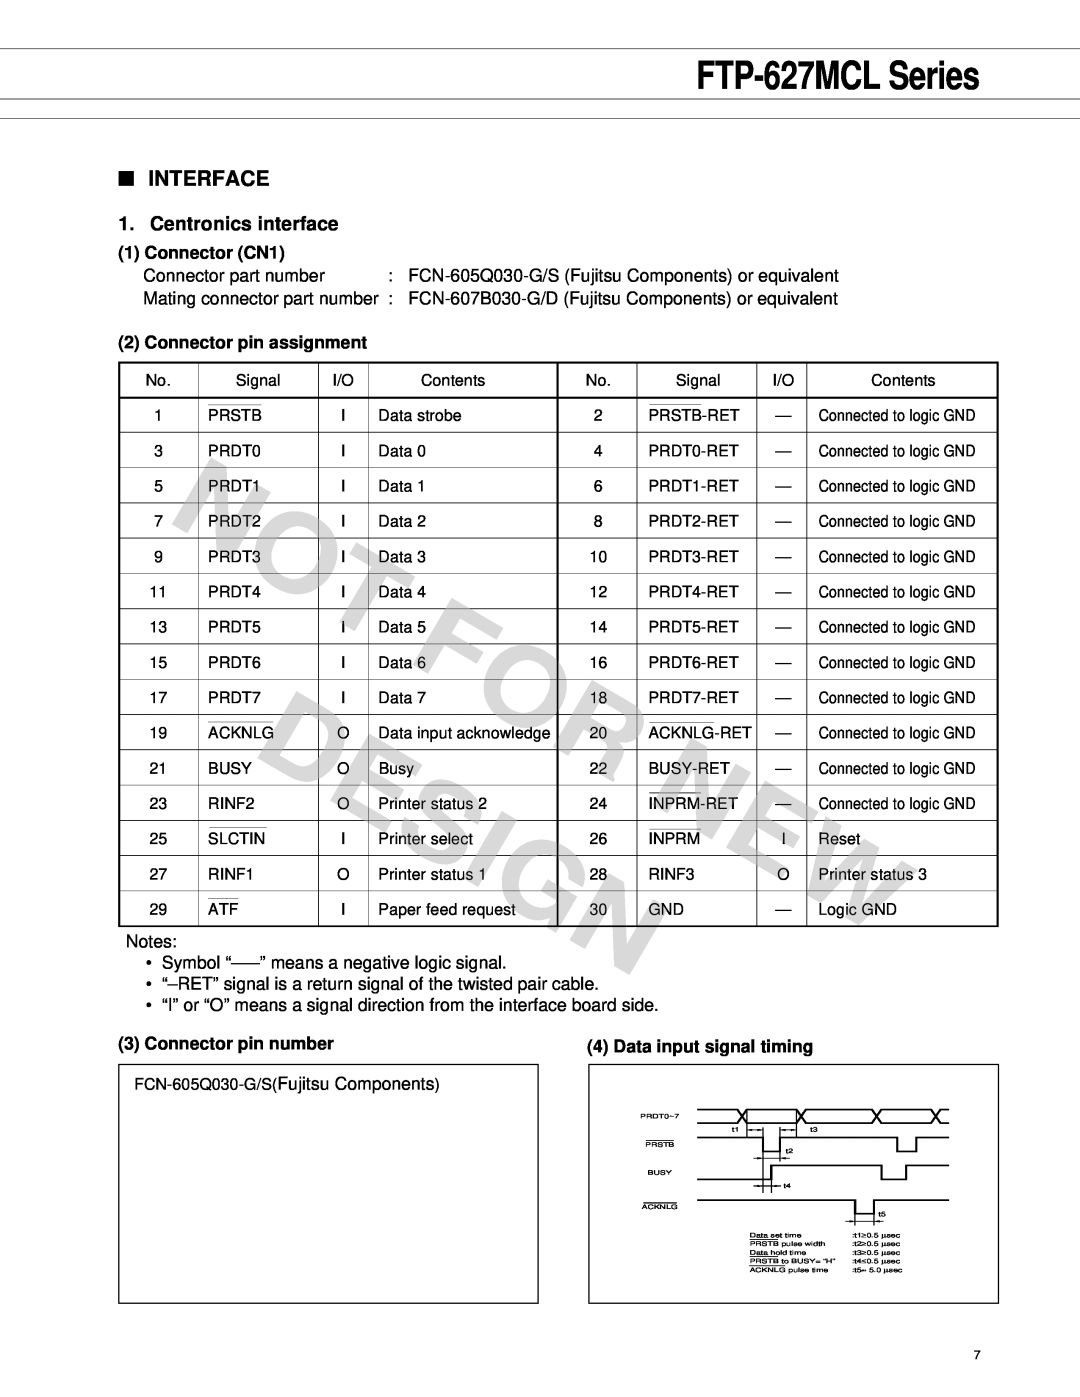 Fujitsu FTP-627 Series manual Interface, Centronics interface, Design, FTP-627MCL Series 